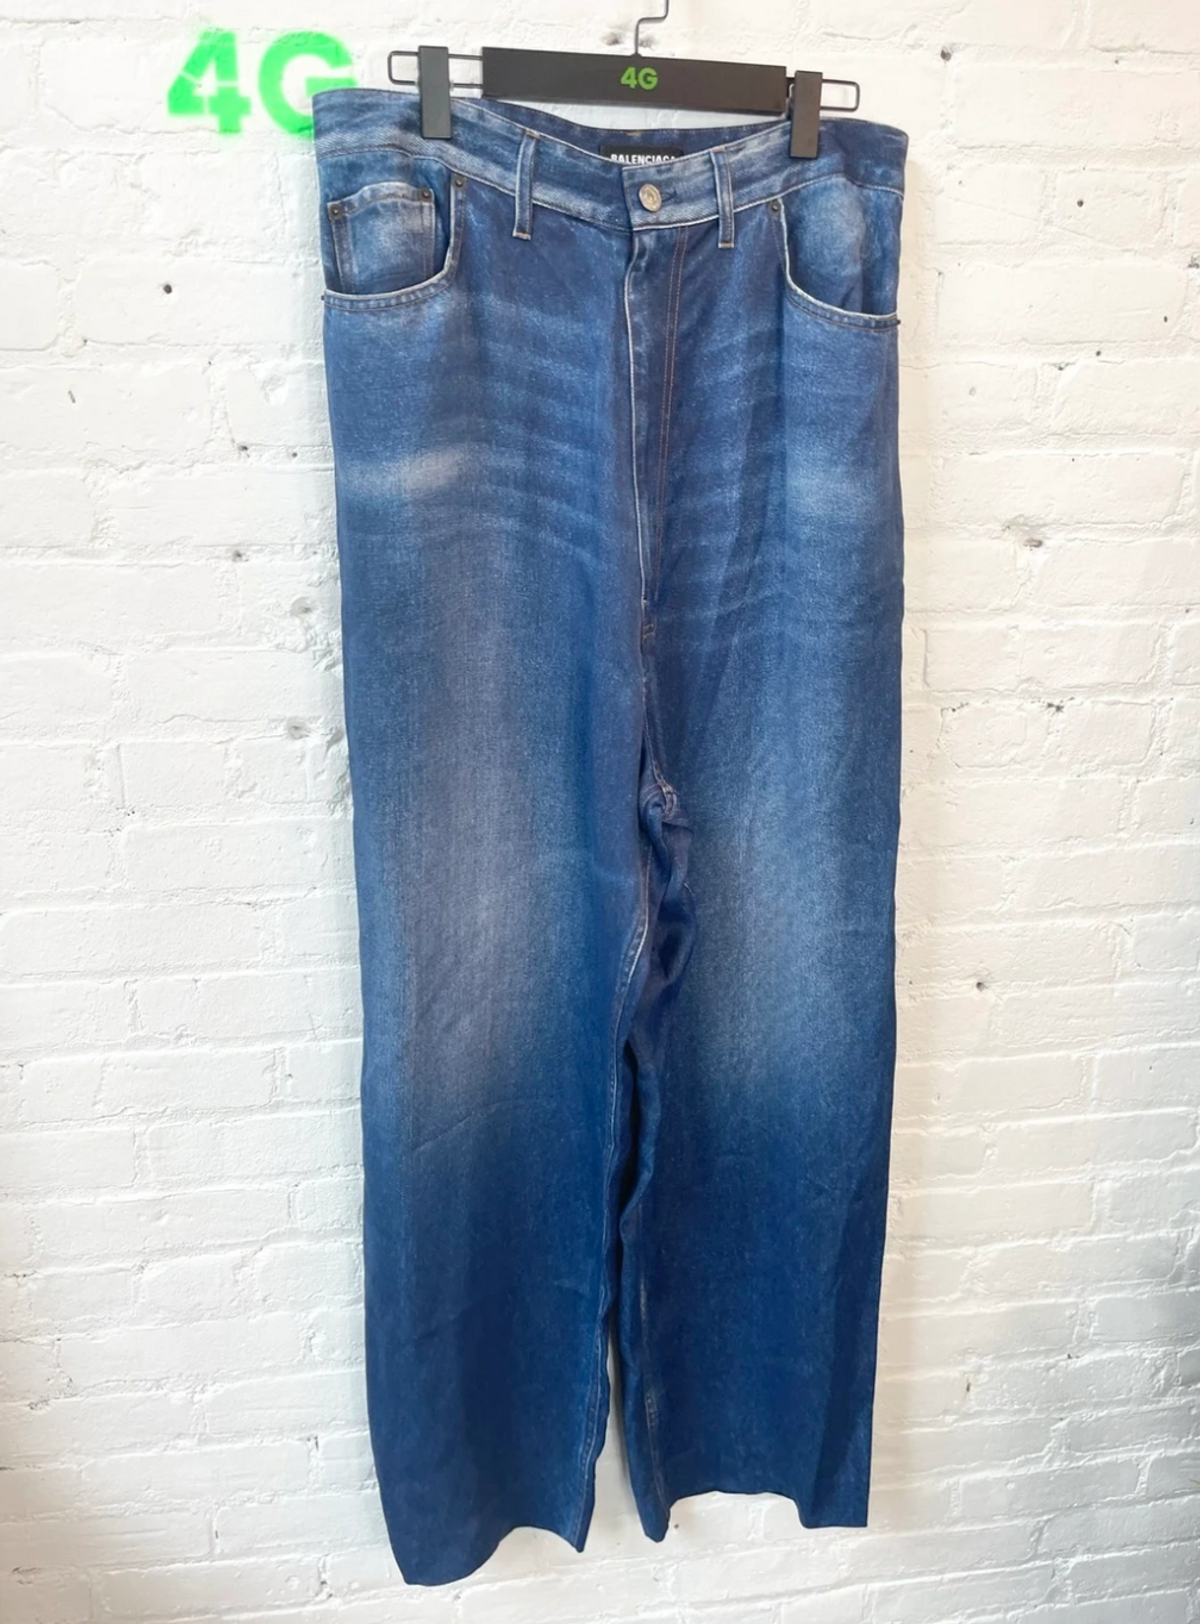 Printed Denim Jeans on Viscose Sweatpants